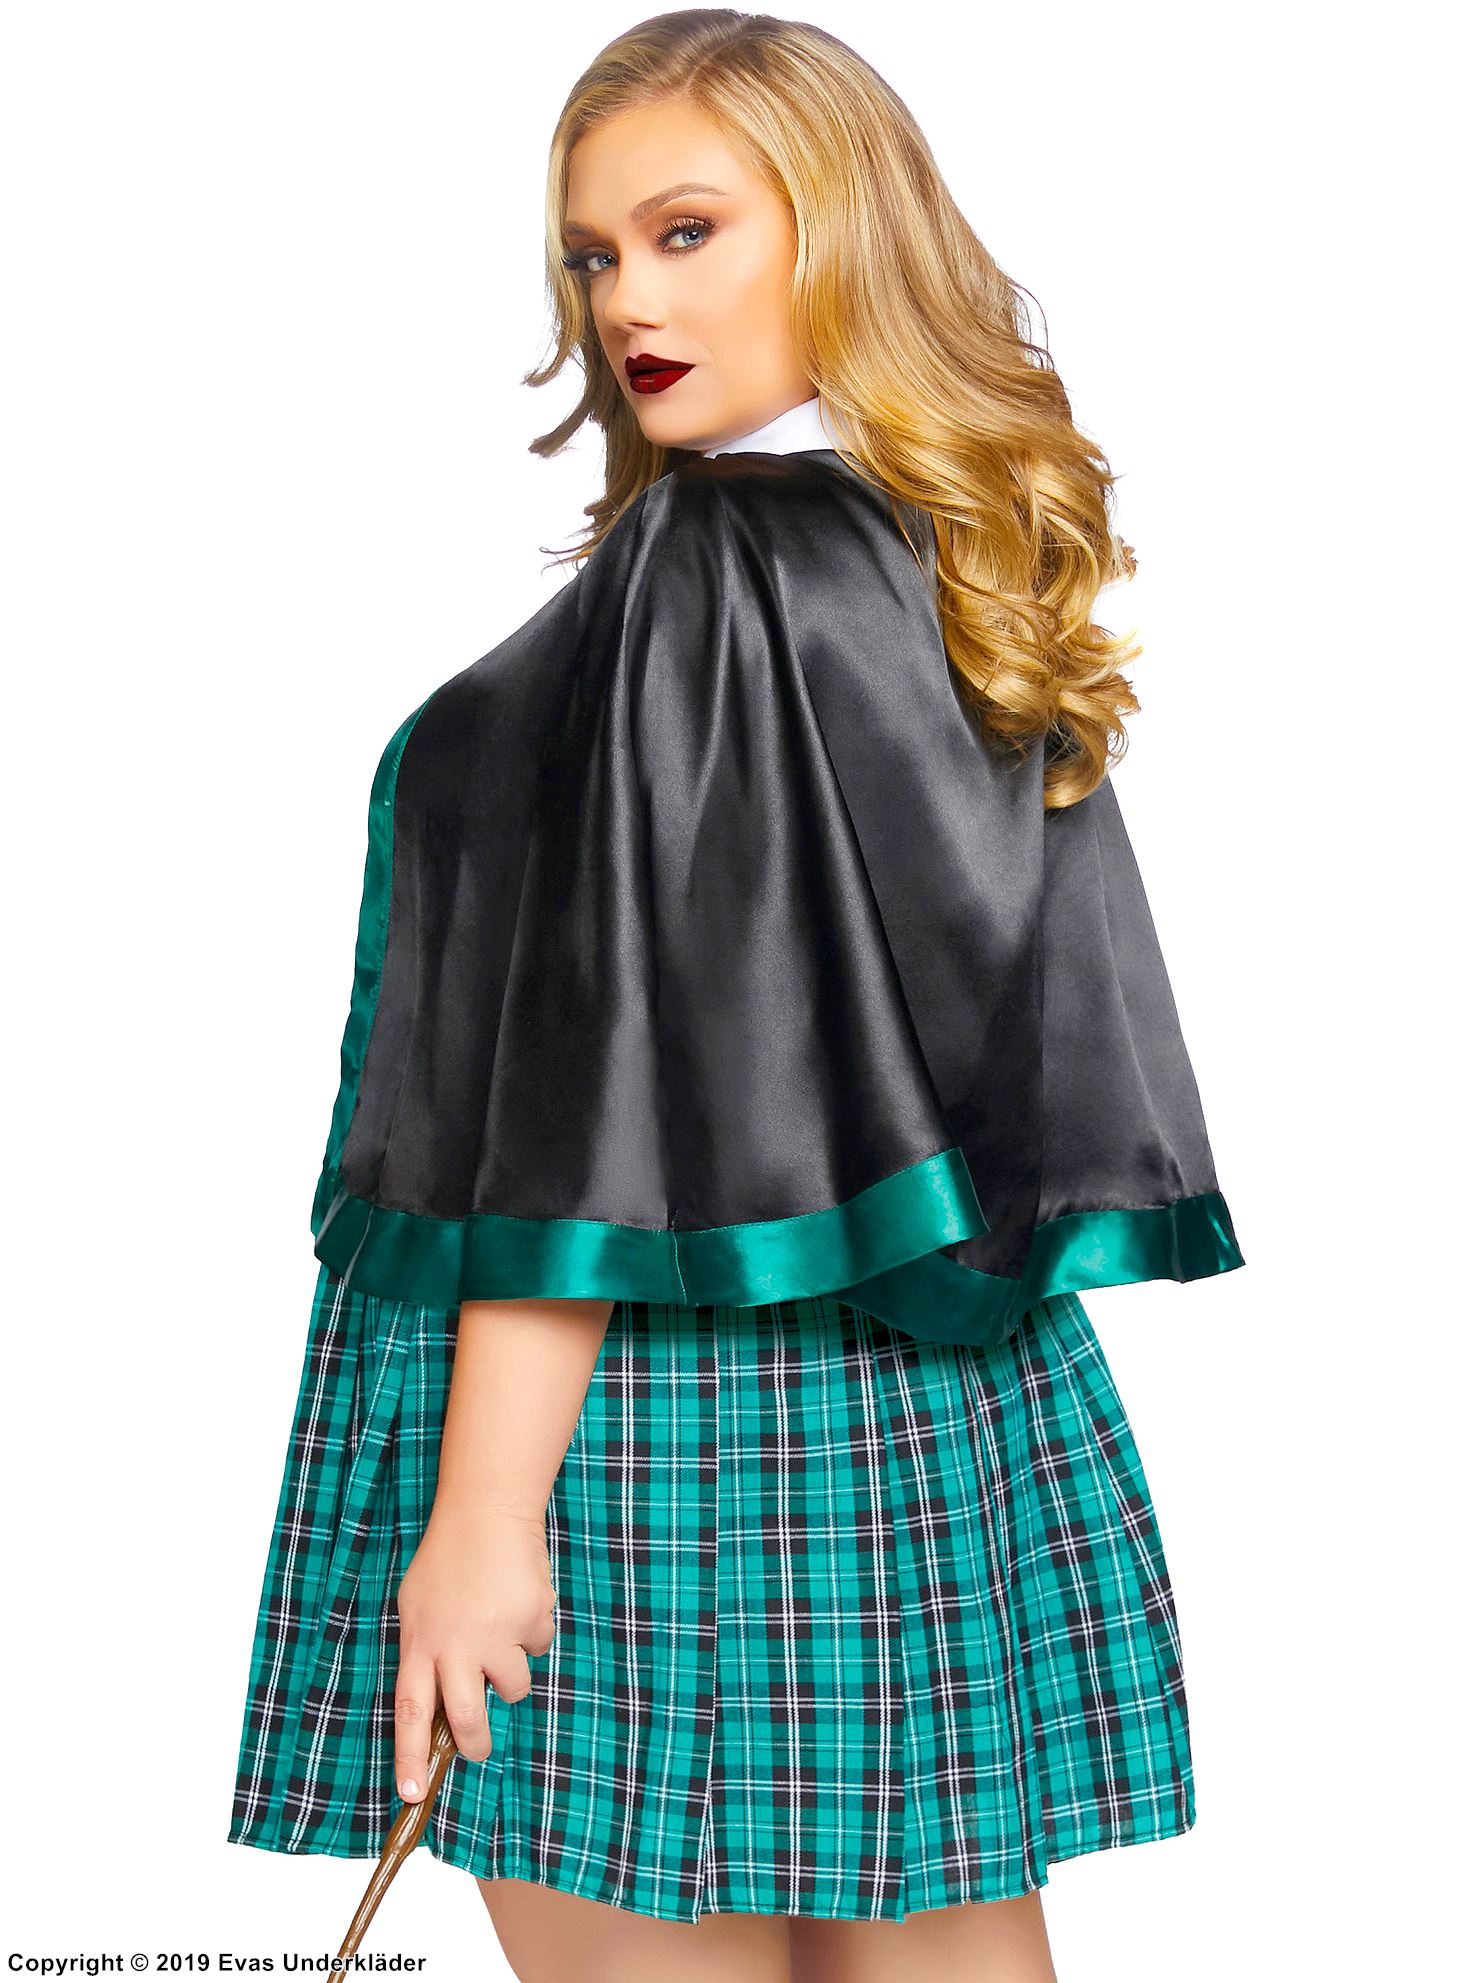 Hermione Granger from Harry Potter, costume dress, necktie, cape, shirt collar, scott-checkered pattern, plus size